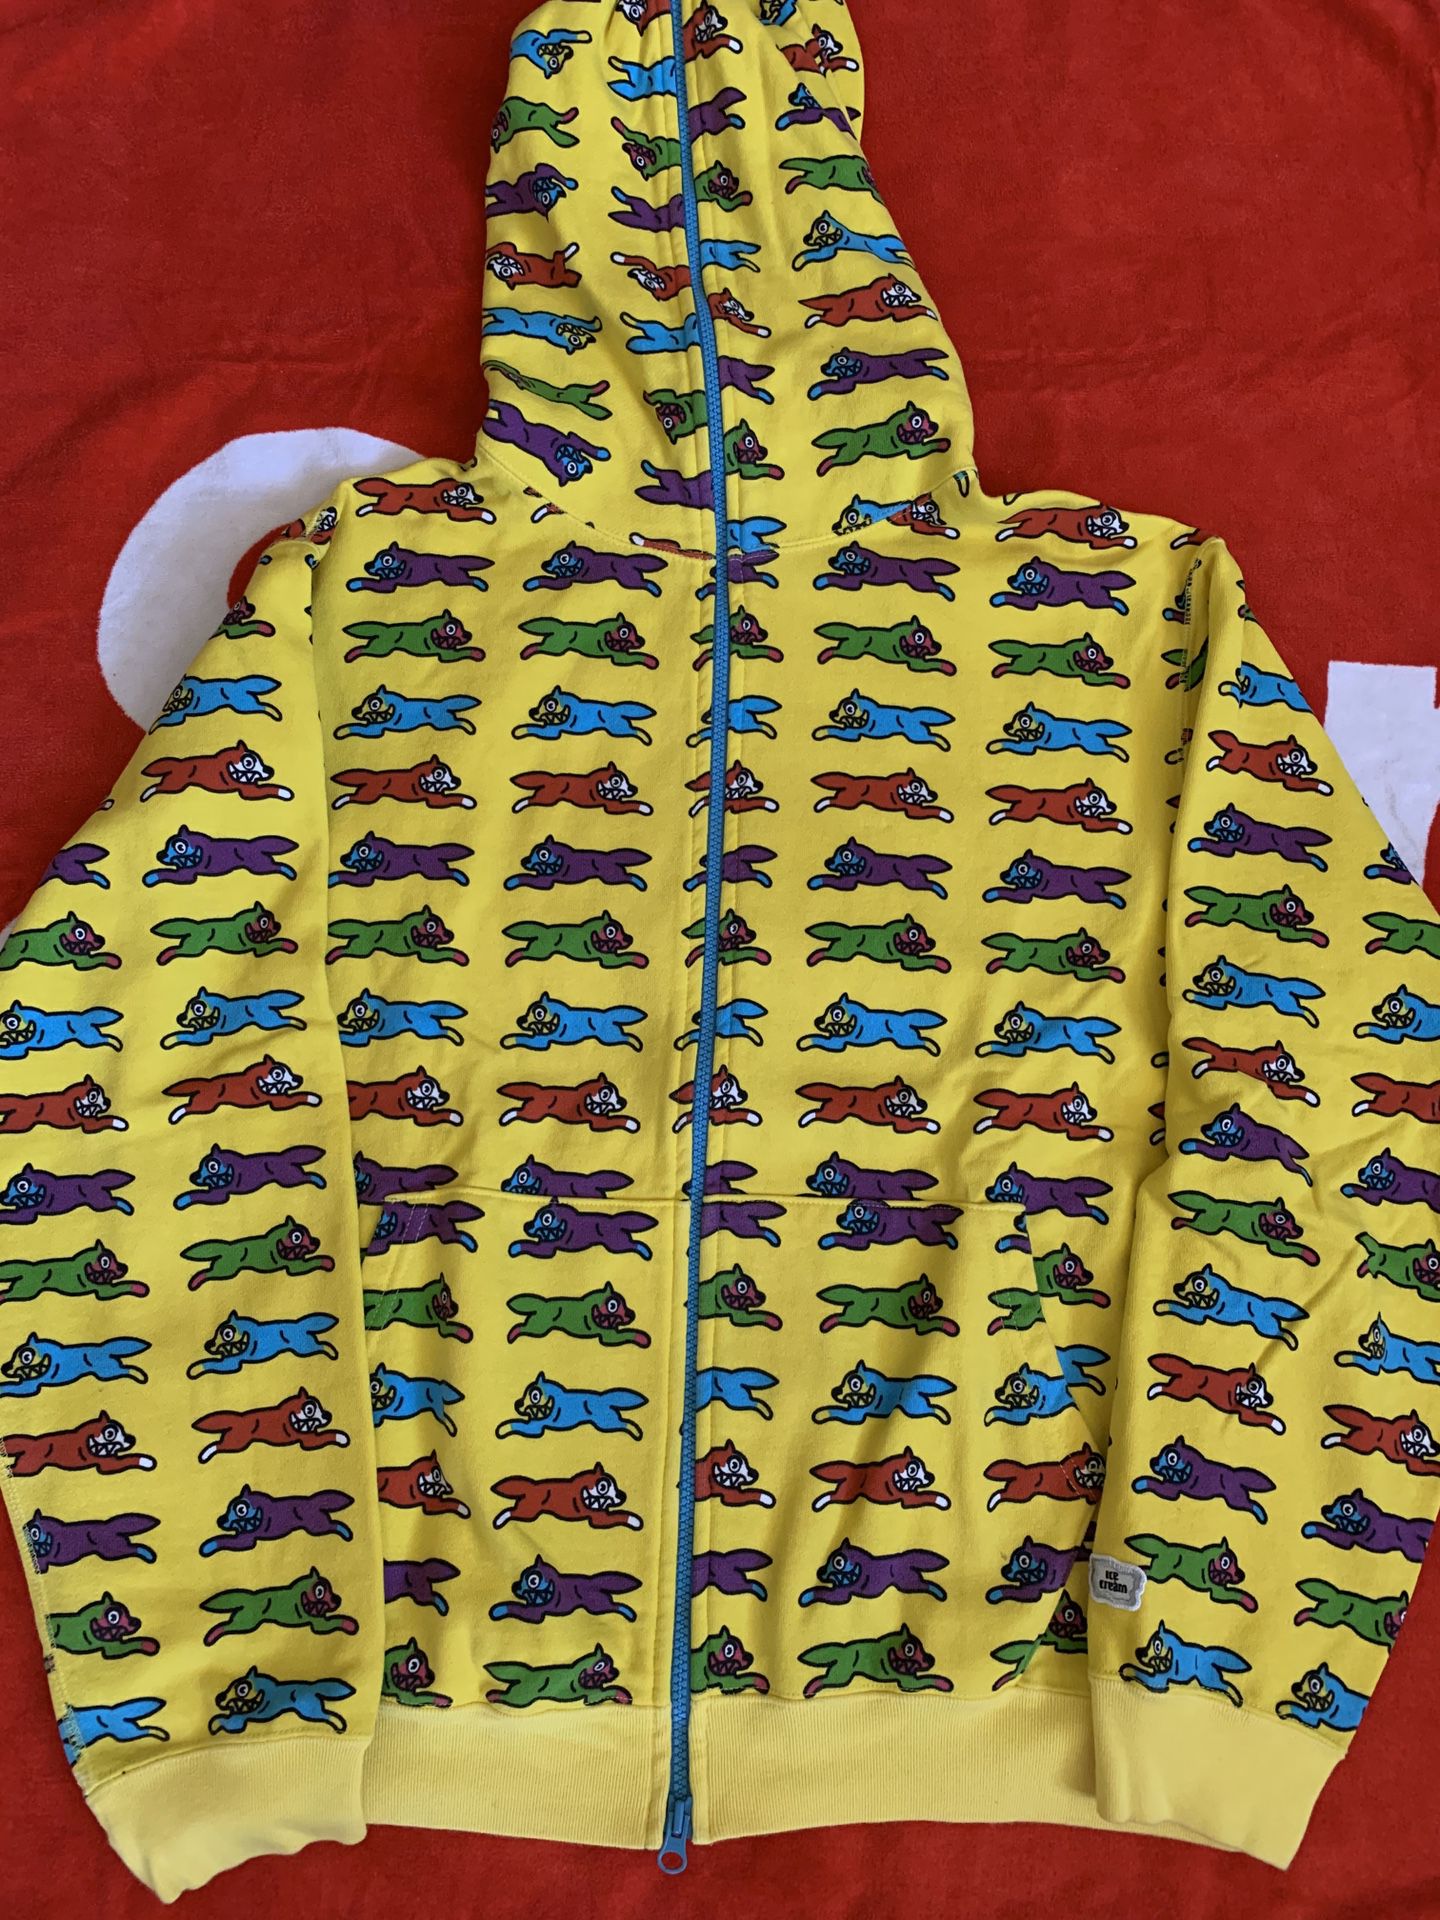 Billionaire boys club bbc running dog full zip up yellow hoodie size medium OG rare diamond and dollars Pharrell Bape shark supreme box logo